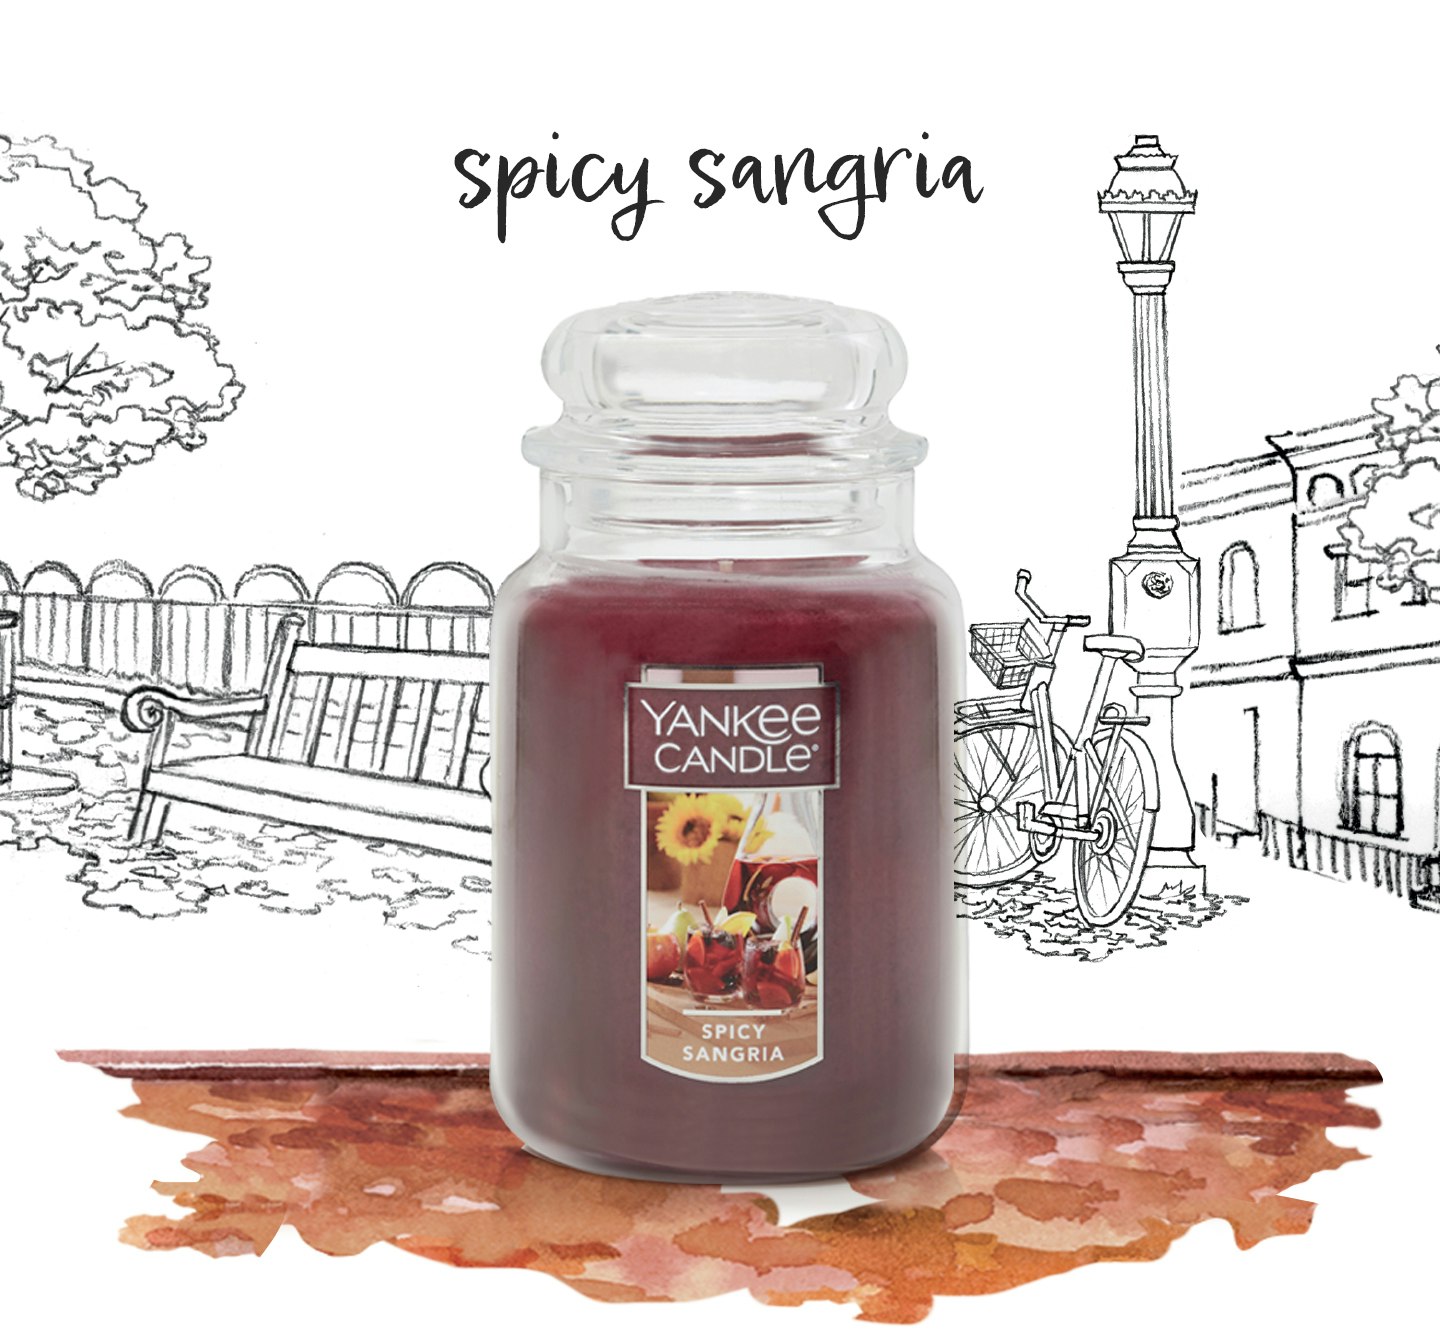 spicy sangria signature large tumbler candle in illustrated city park scene